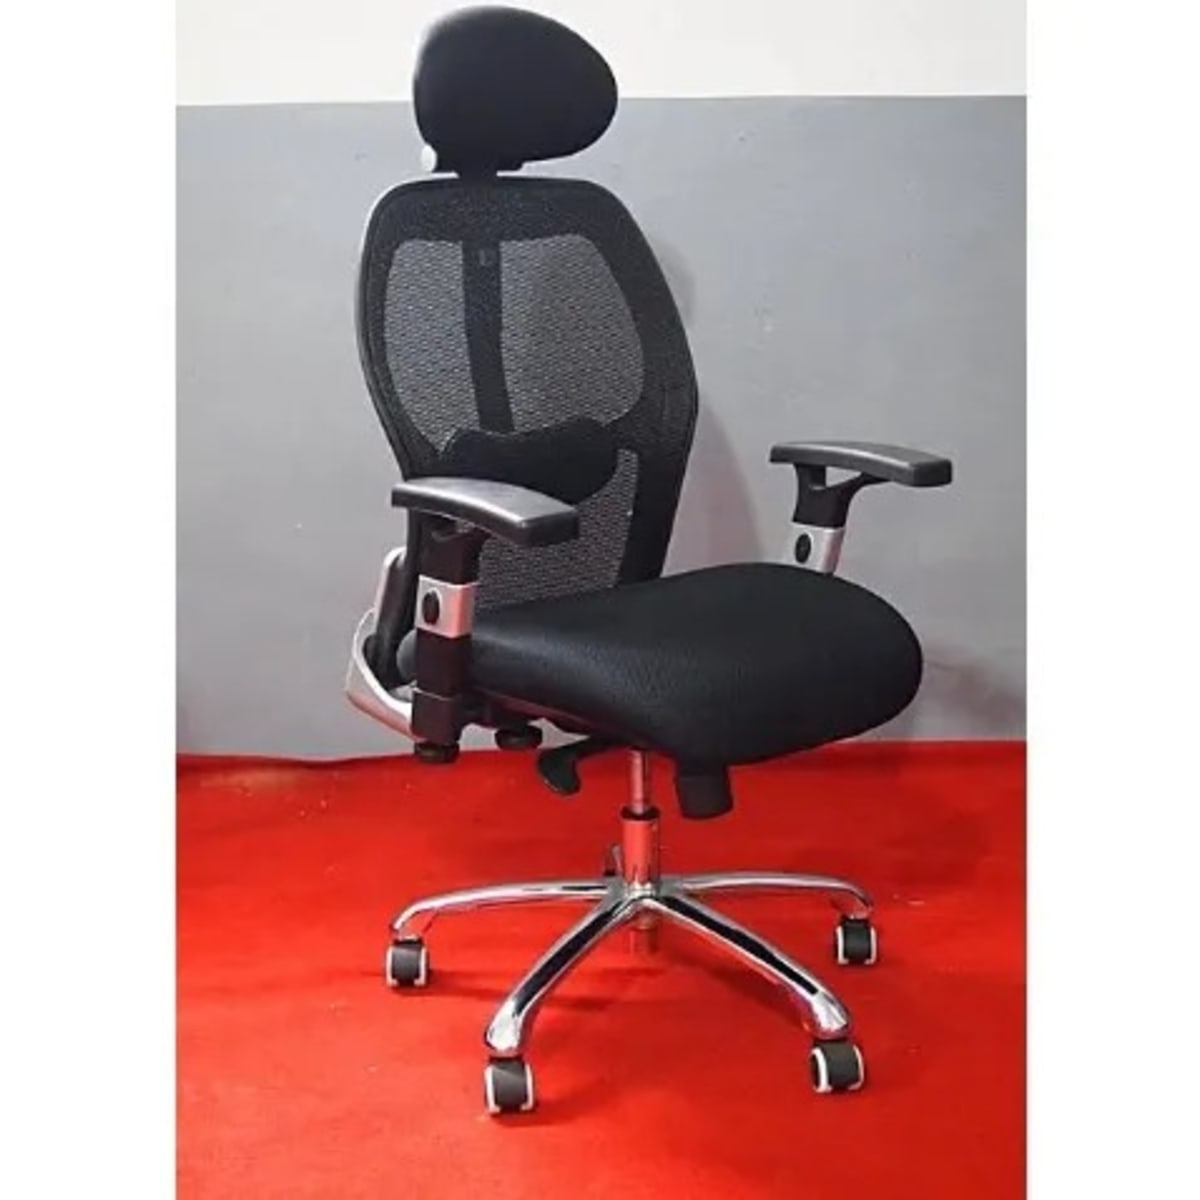 Ergo-Tek Mesh Manager Chair, Mesh Office Chair